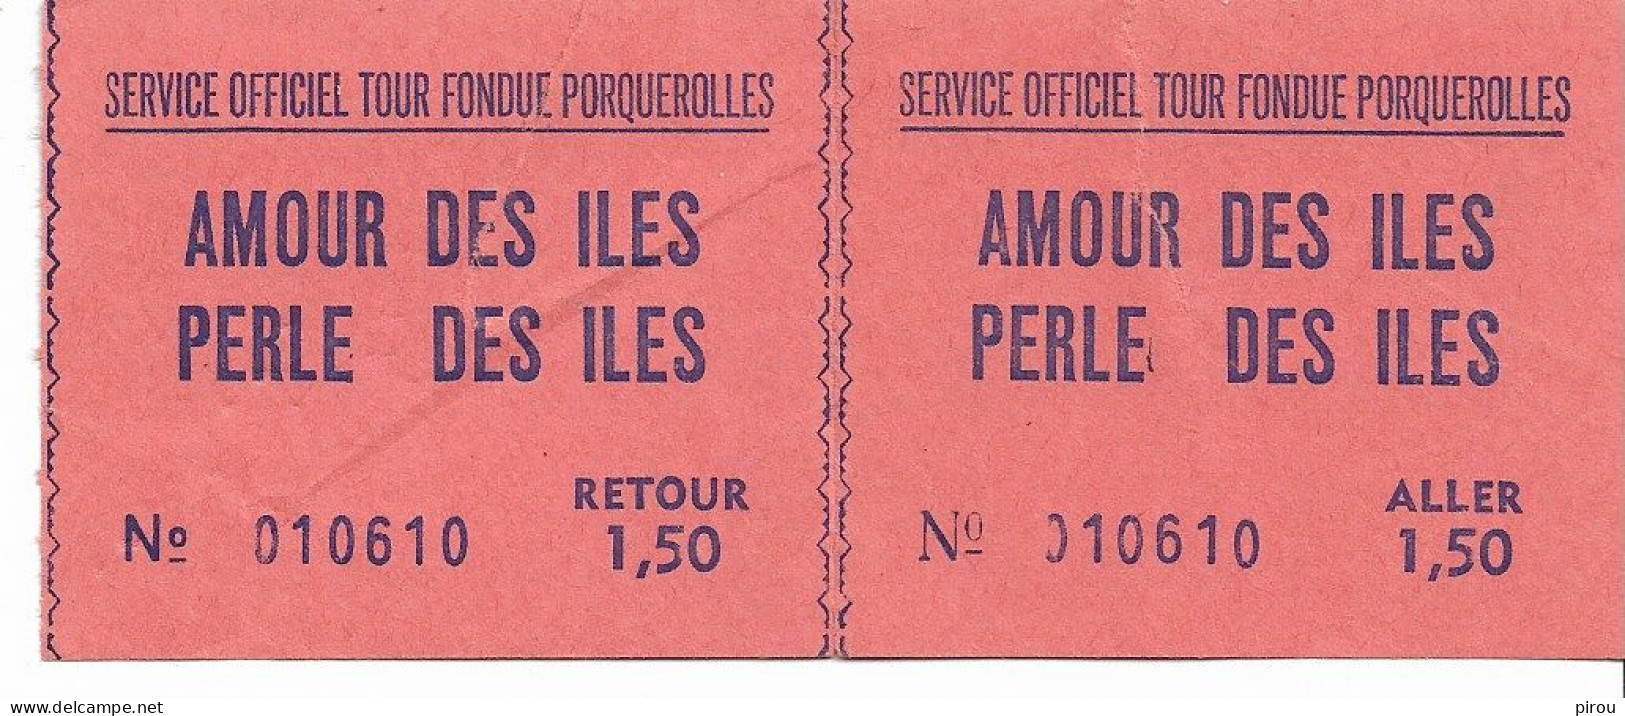 BILLETS De BATEAU POUR PORQUEROLLES 1969 - Toegangskaarten